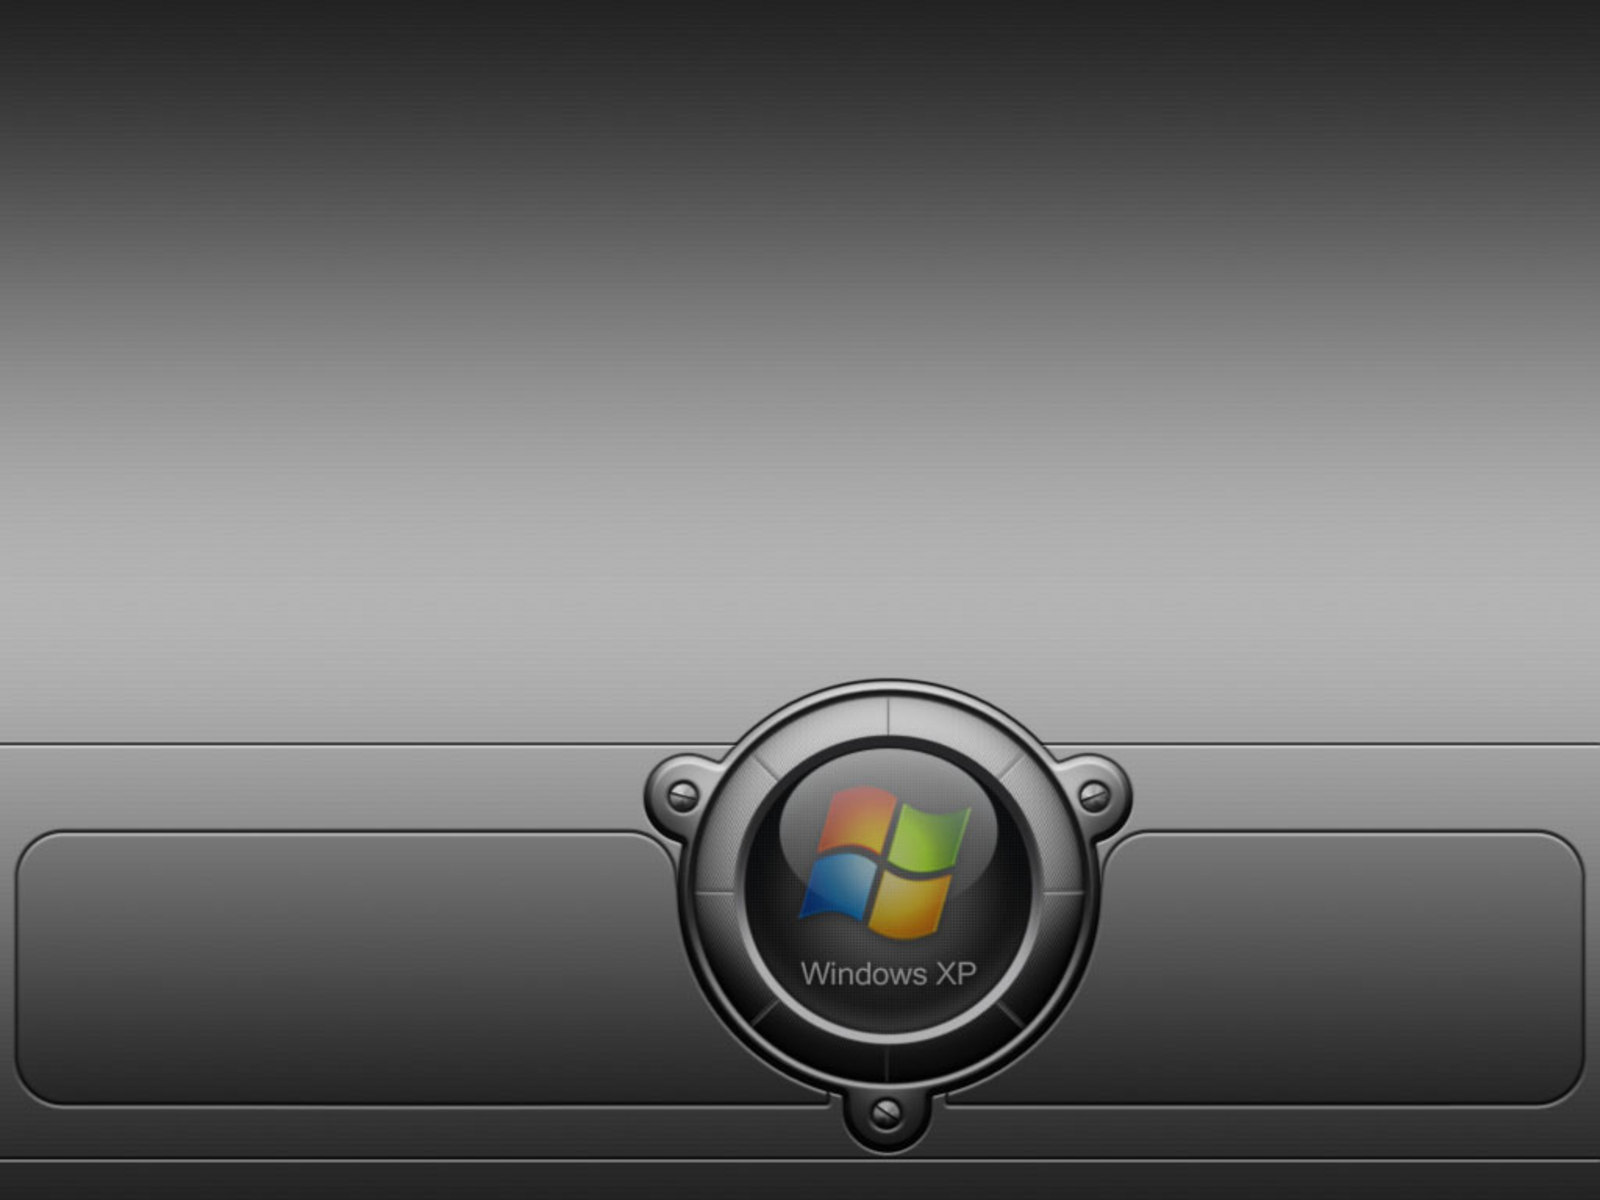 HD Wallpaper For Windows XP